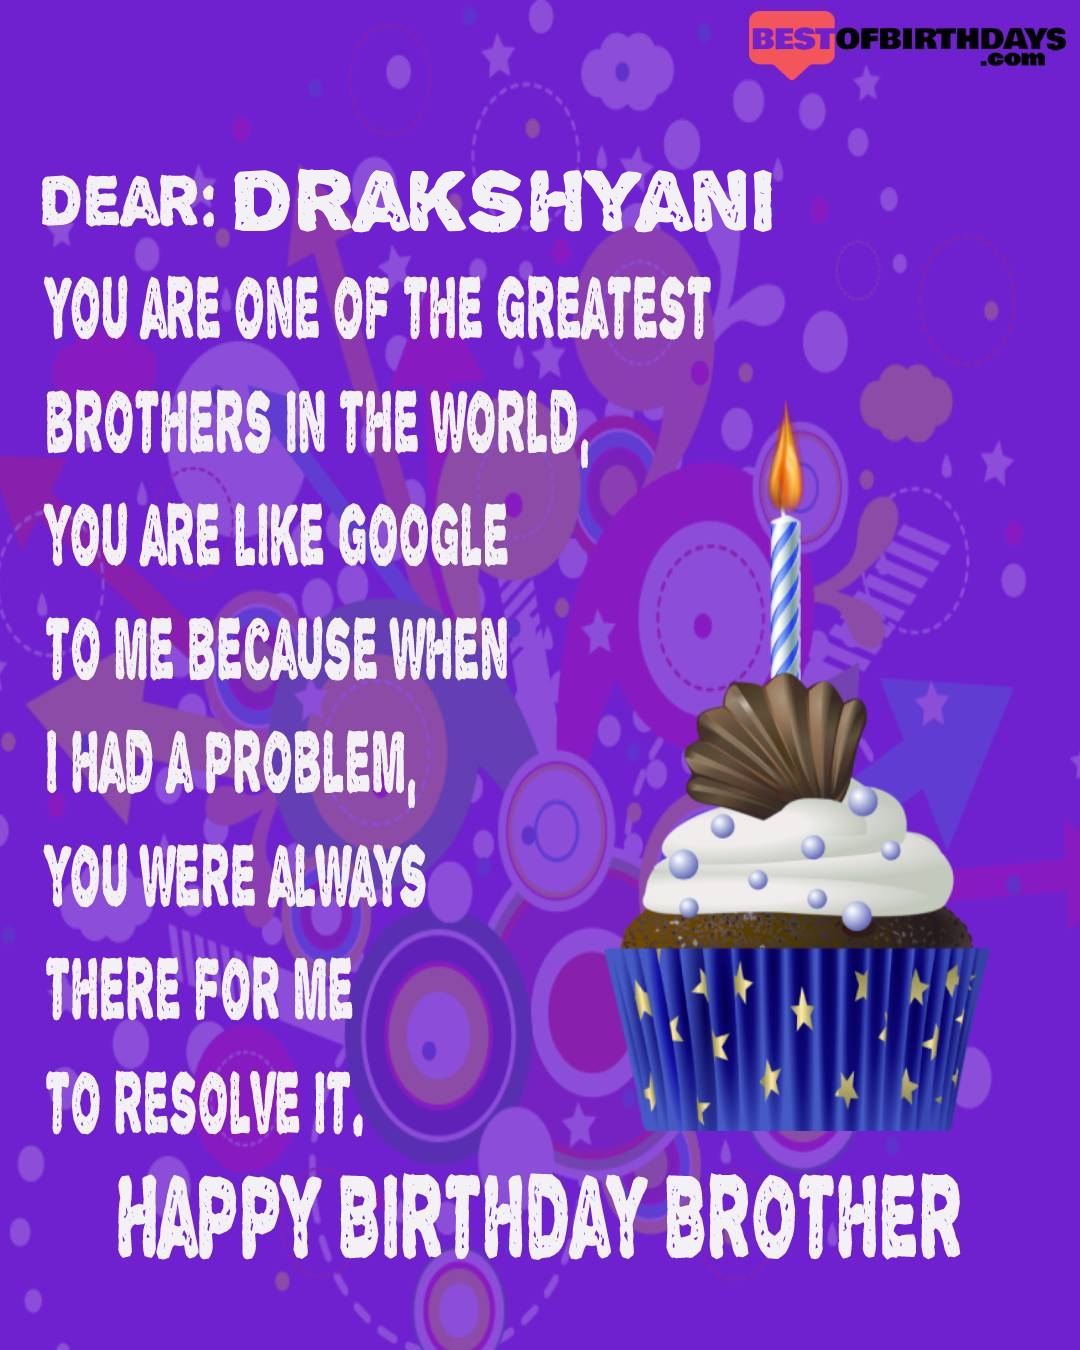 Happy birthday drakshyani bhai brother bro